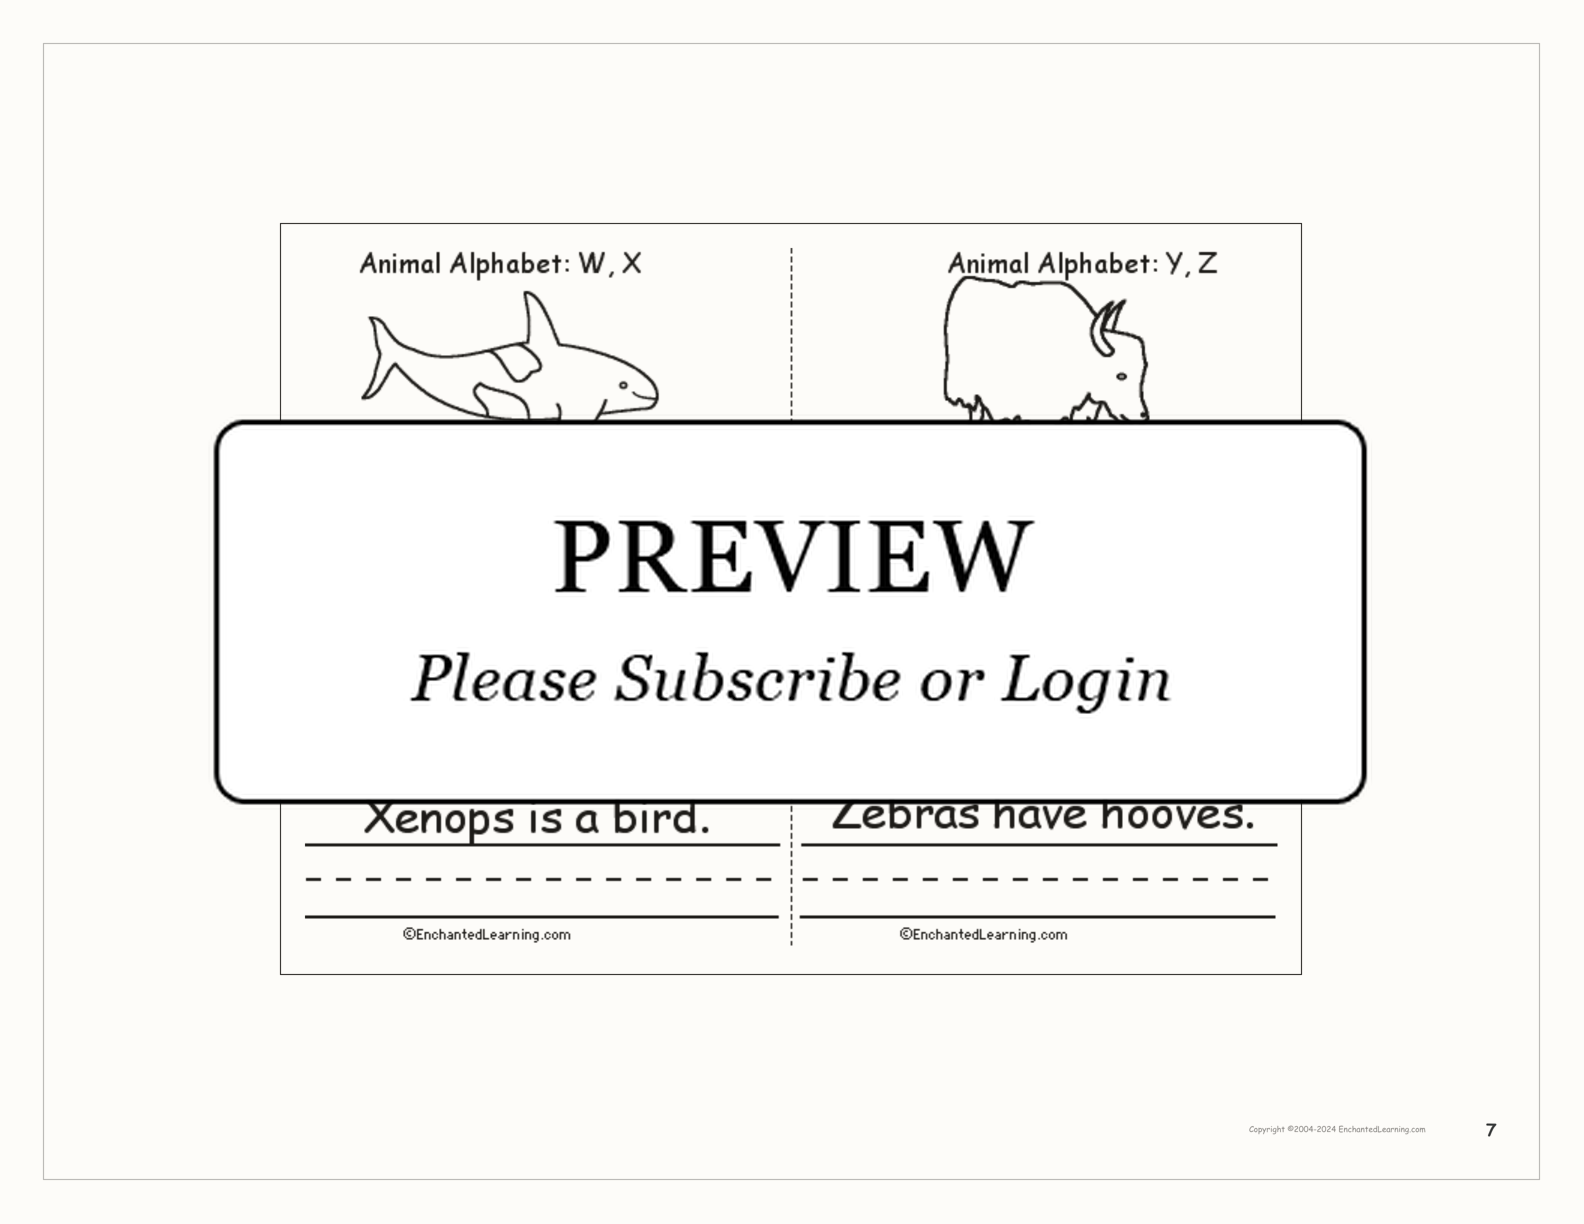 Animal Alphabet Book interactive printout page 7